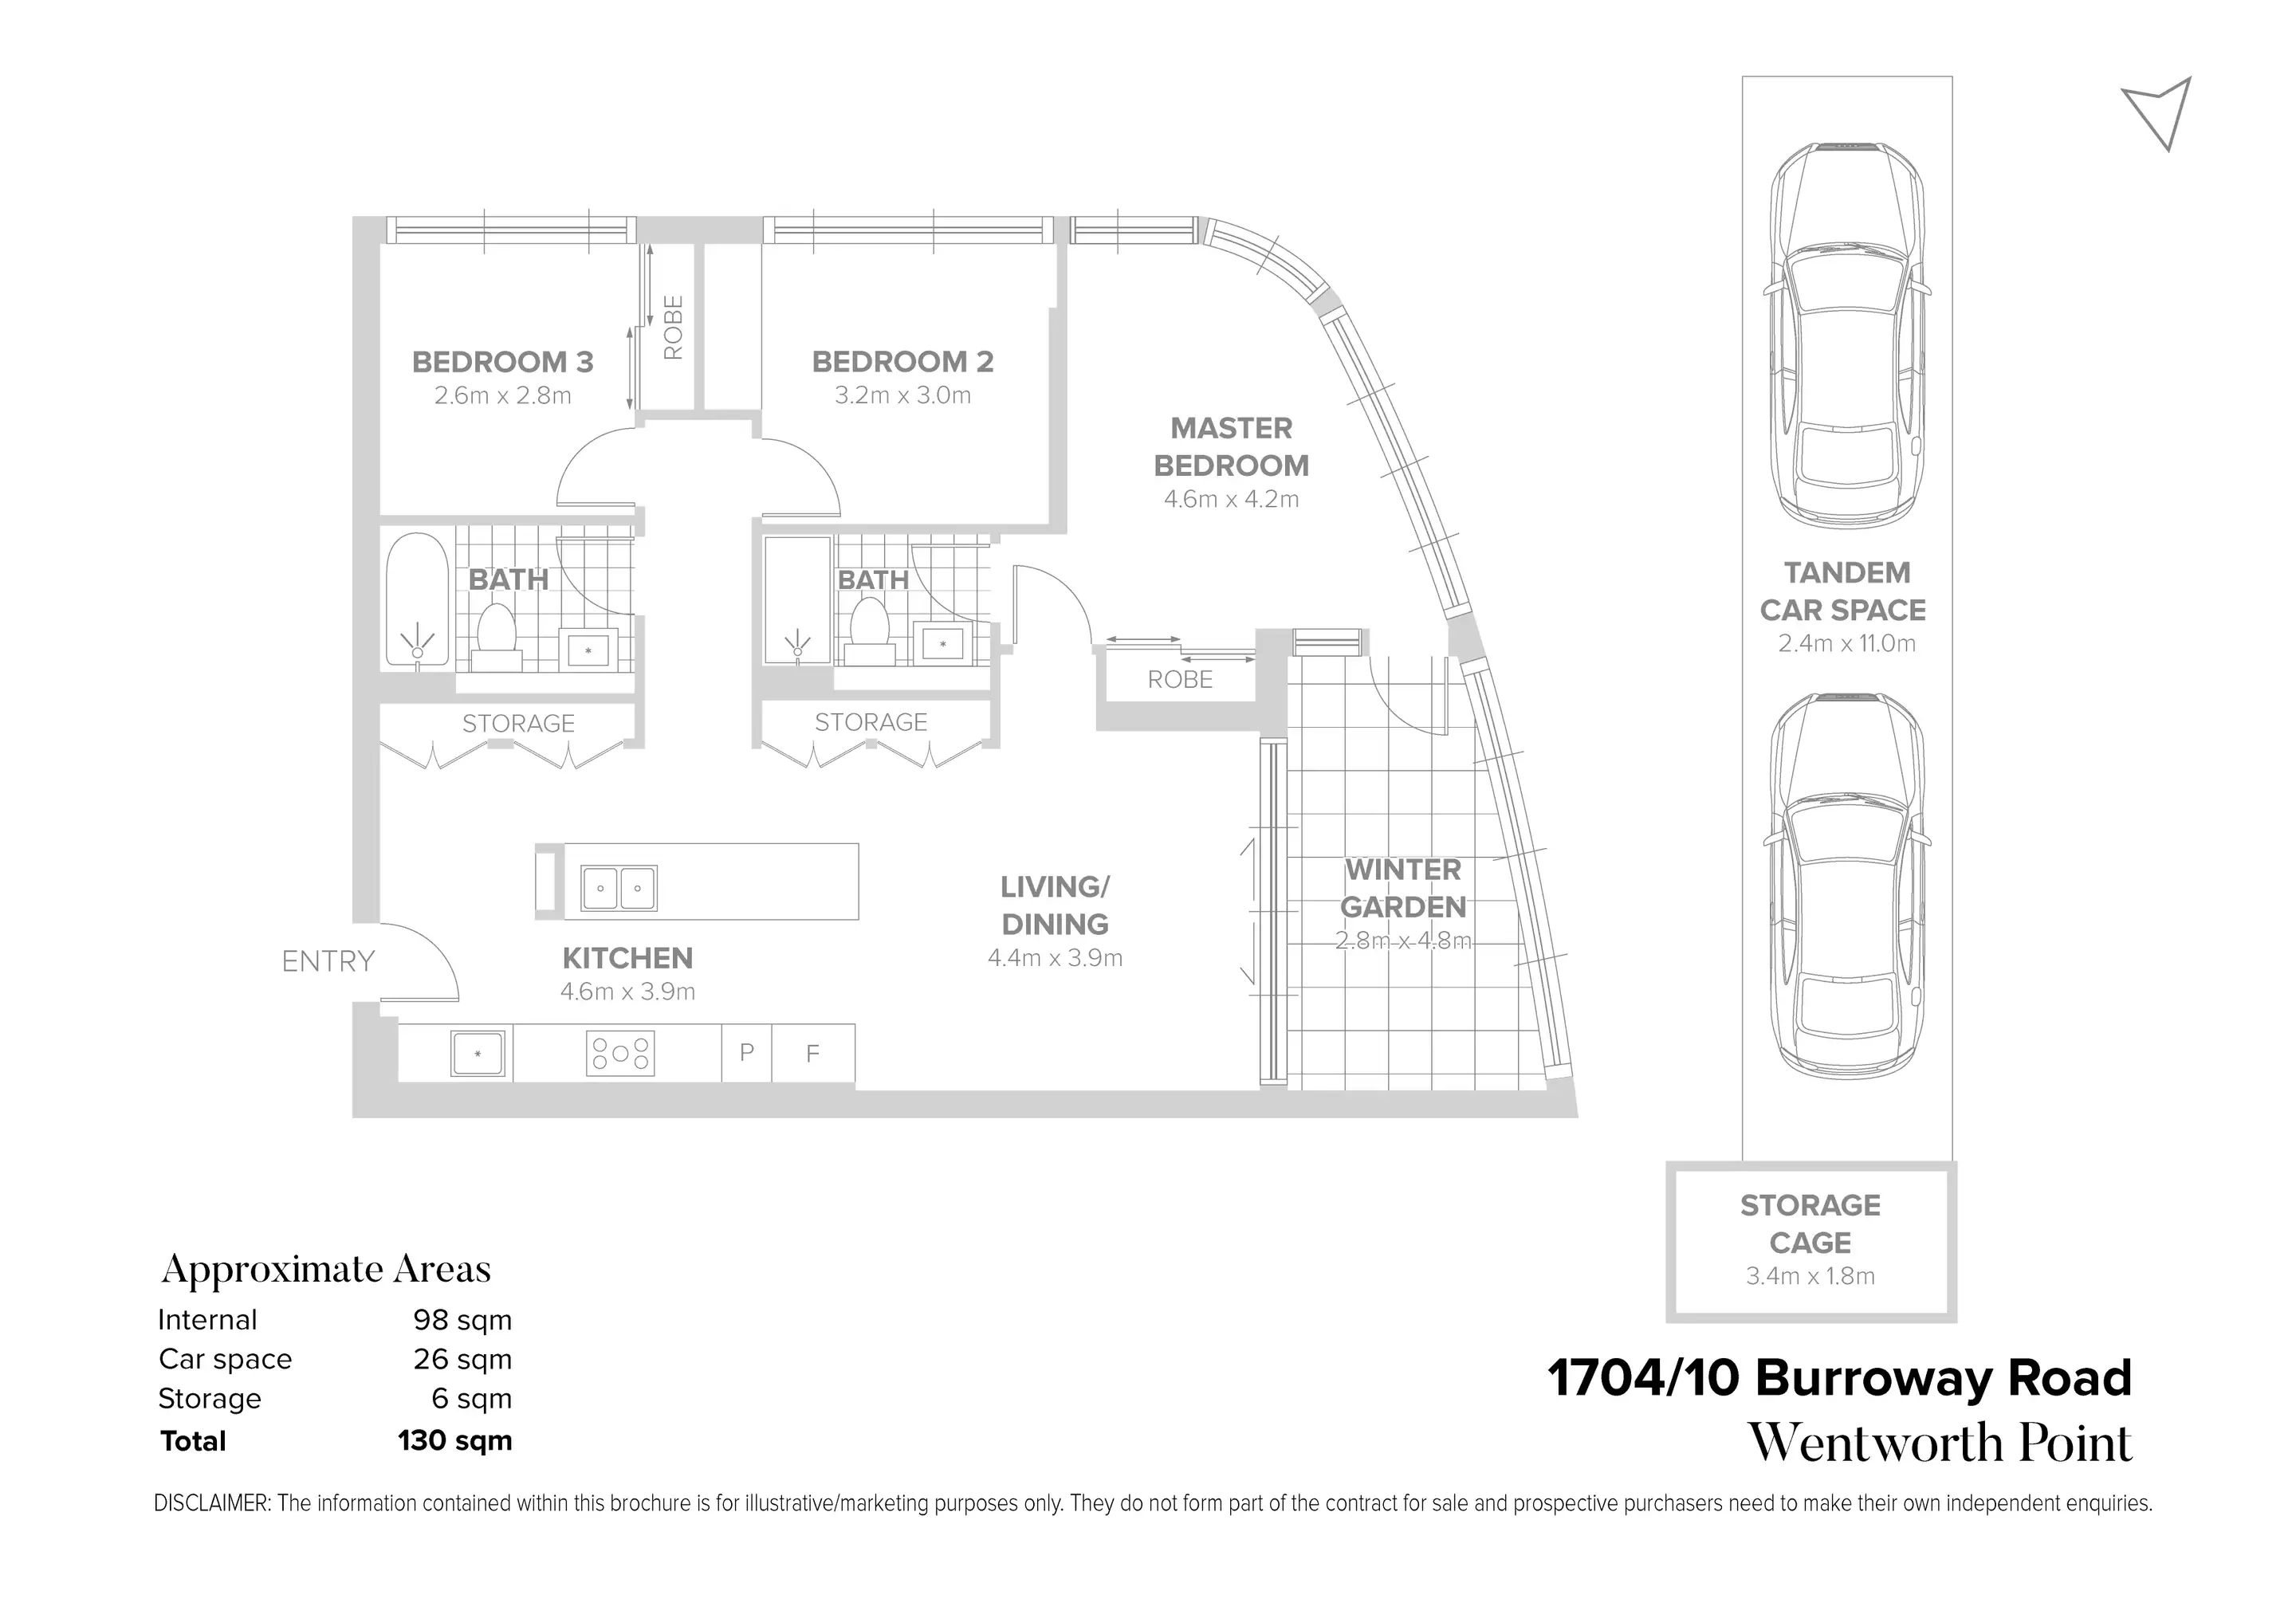 1704/10 Burroway Road, Wentworth Point Sold by Chidiac Realty - floorplan